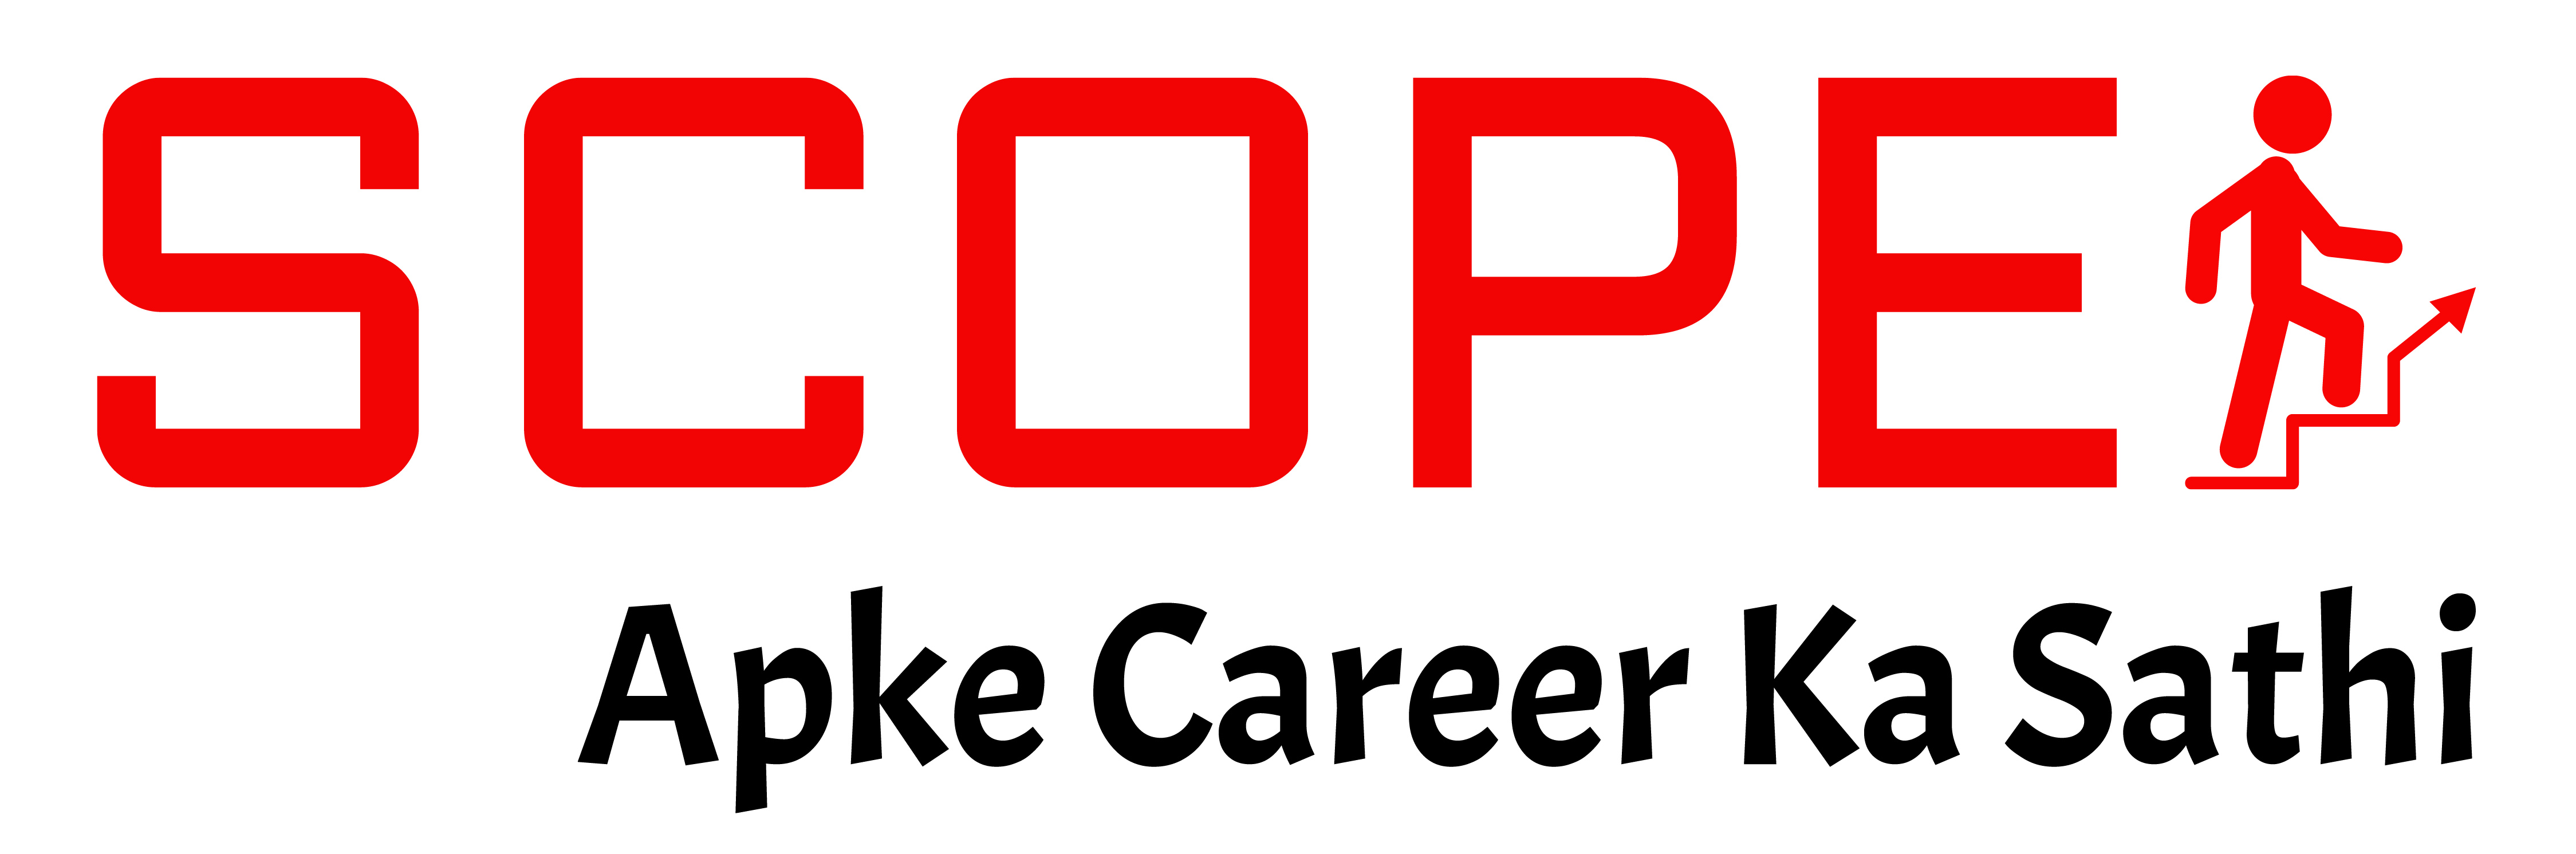 Scope academy final logo-01